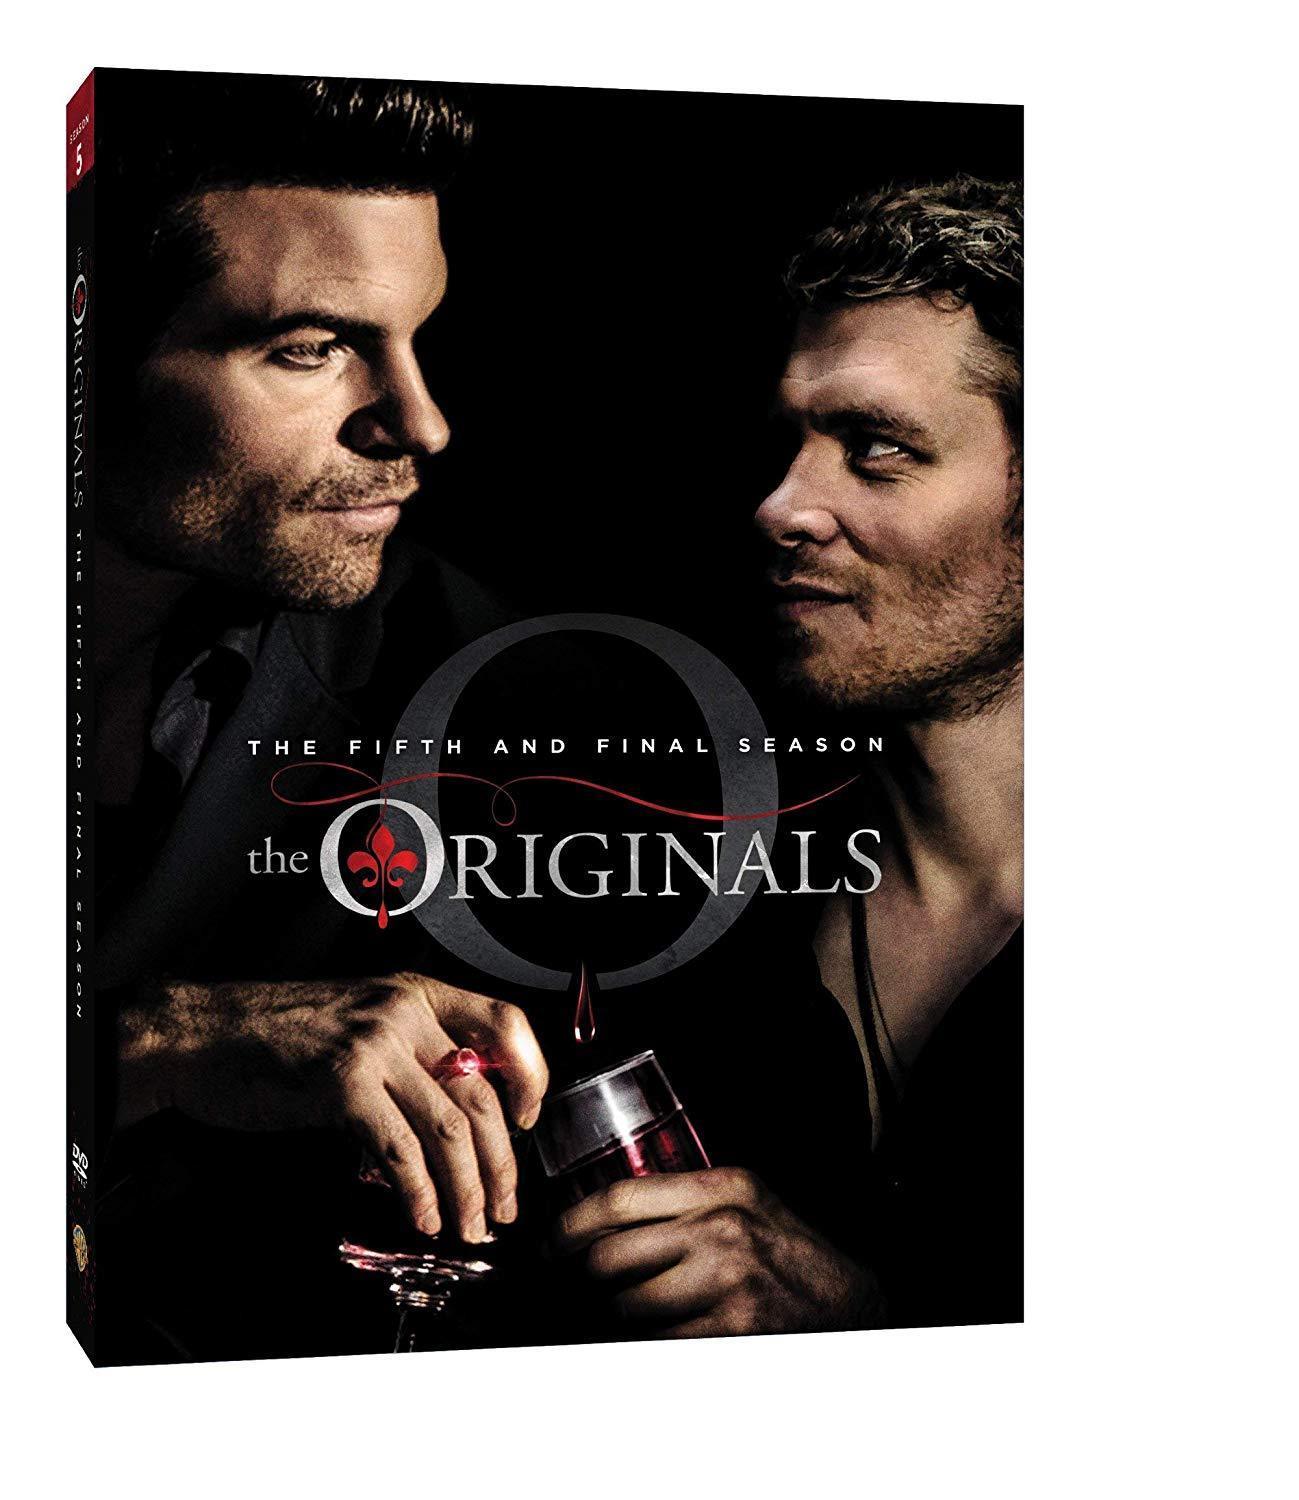 The Originals Season 5 DVD Warner Brothers DVDs & Blu-ray Discs > DVDs